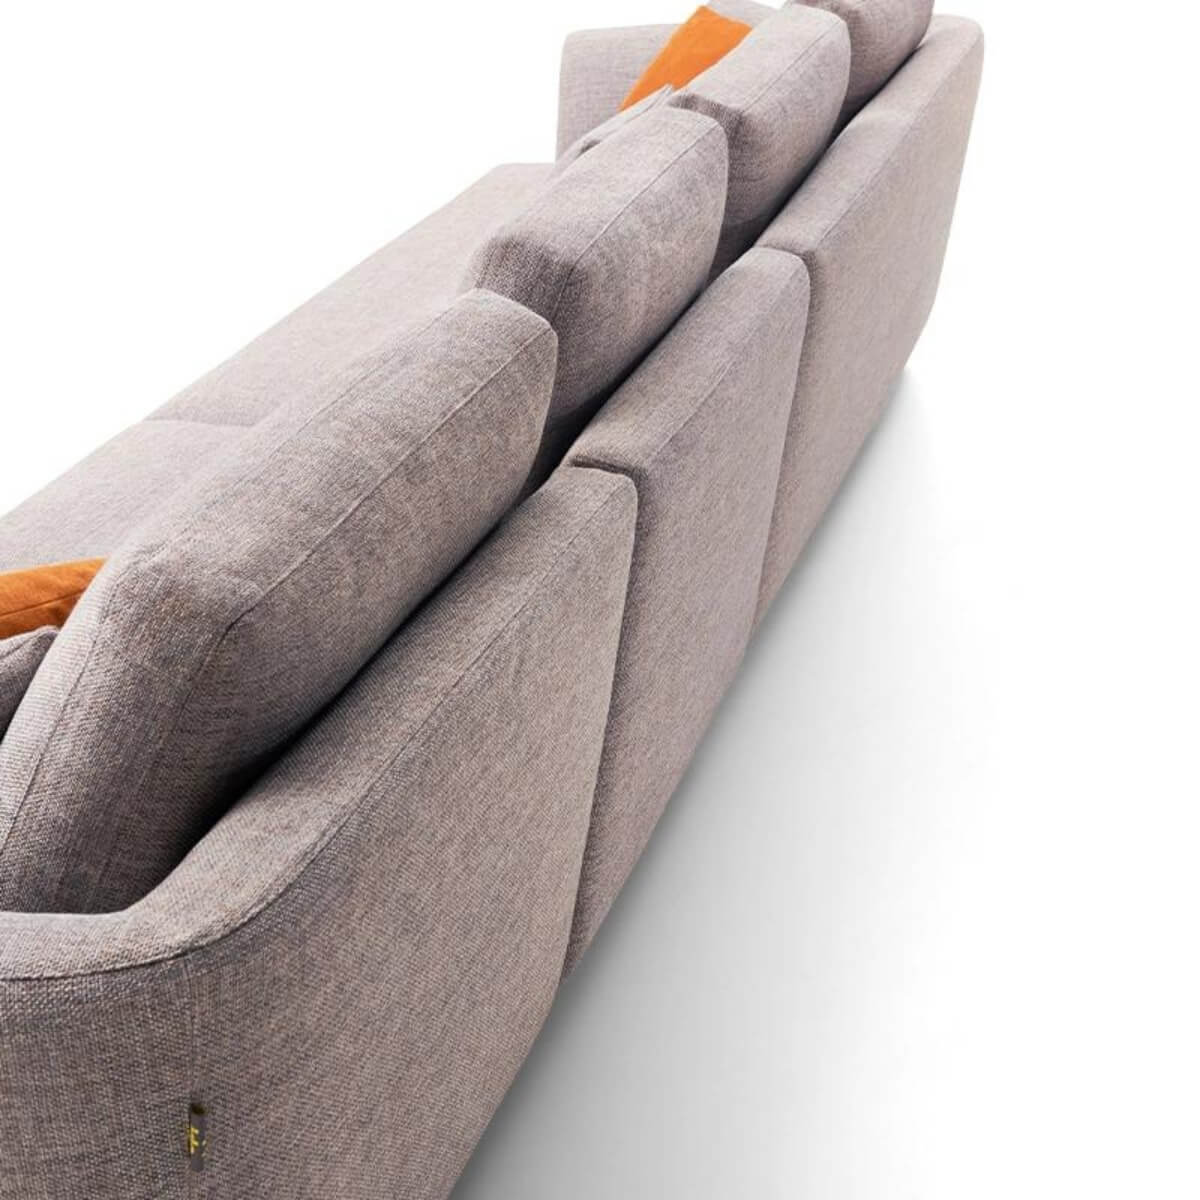 Classic Couch Elegant Cotton Linen Chaise Sofa